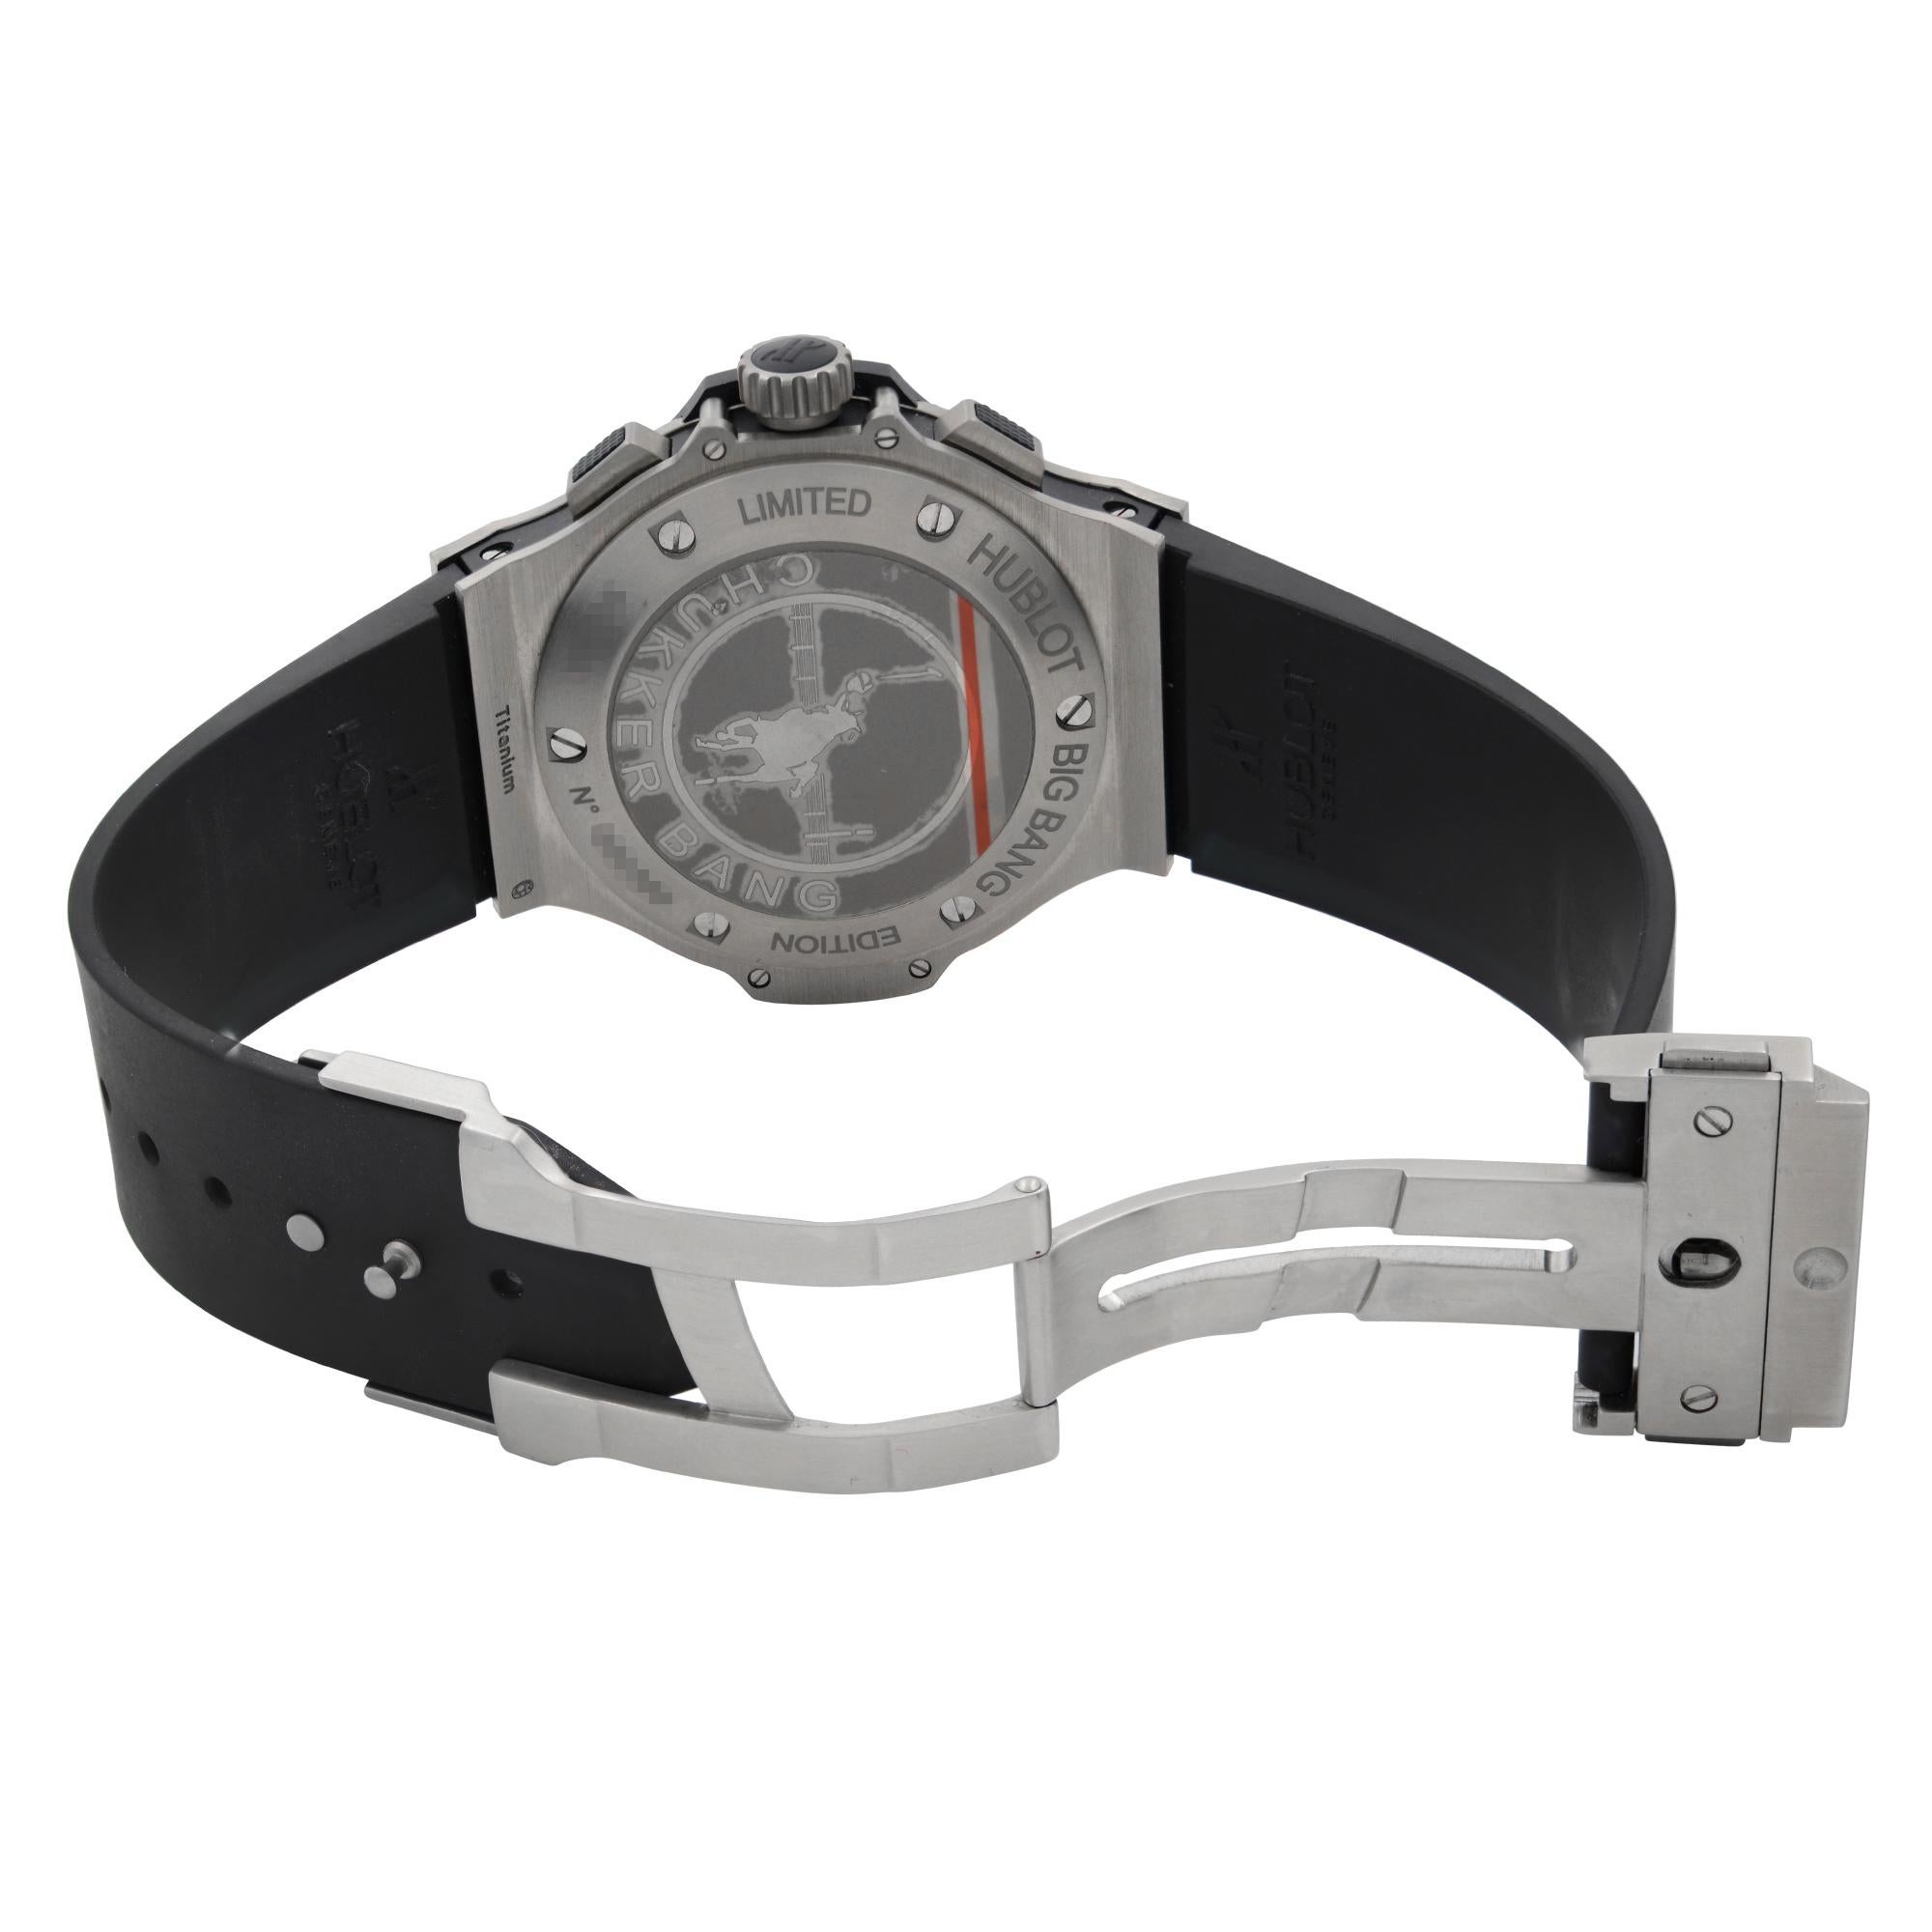 Hublot Chukker Bang Titanium Black Dial Automatic Men's Watch 317.NM.1137.VR 2